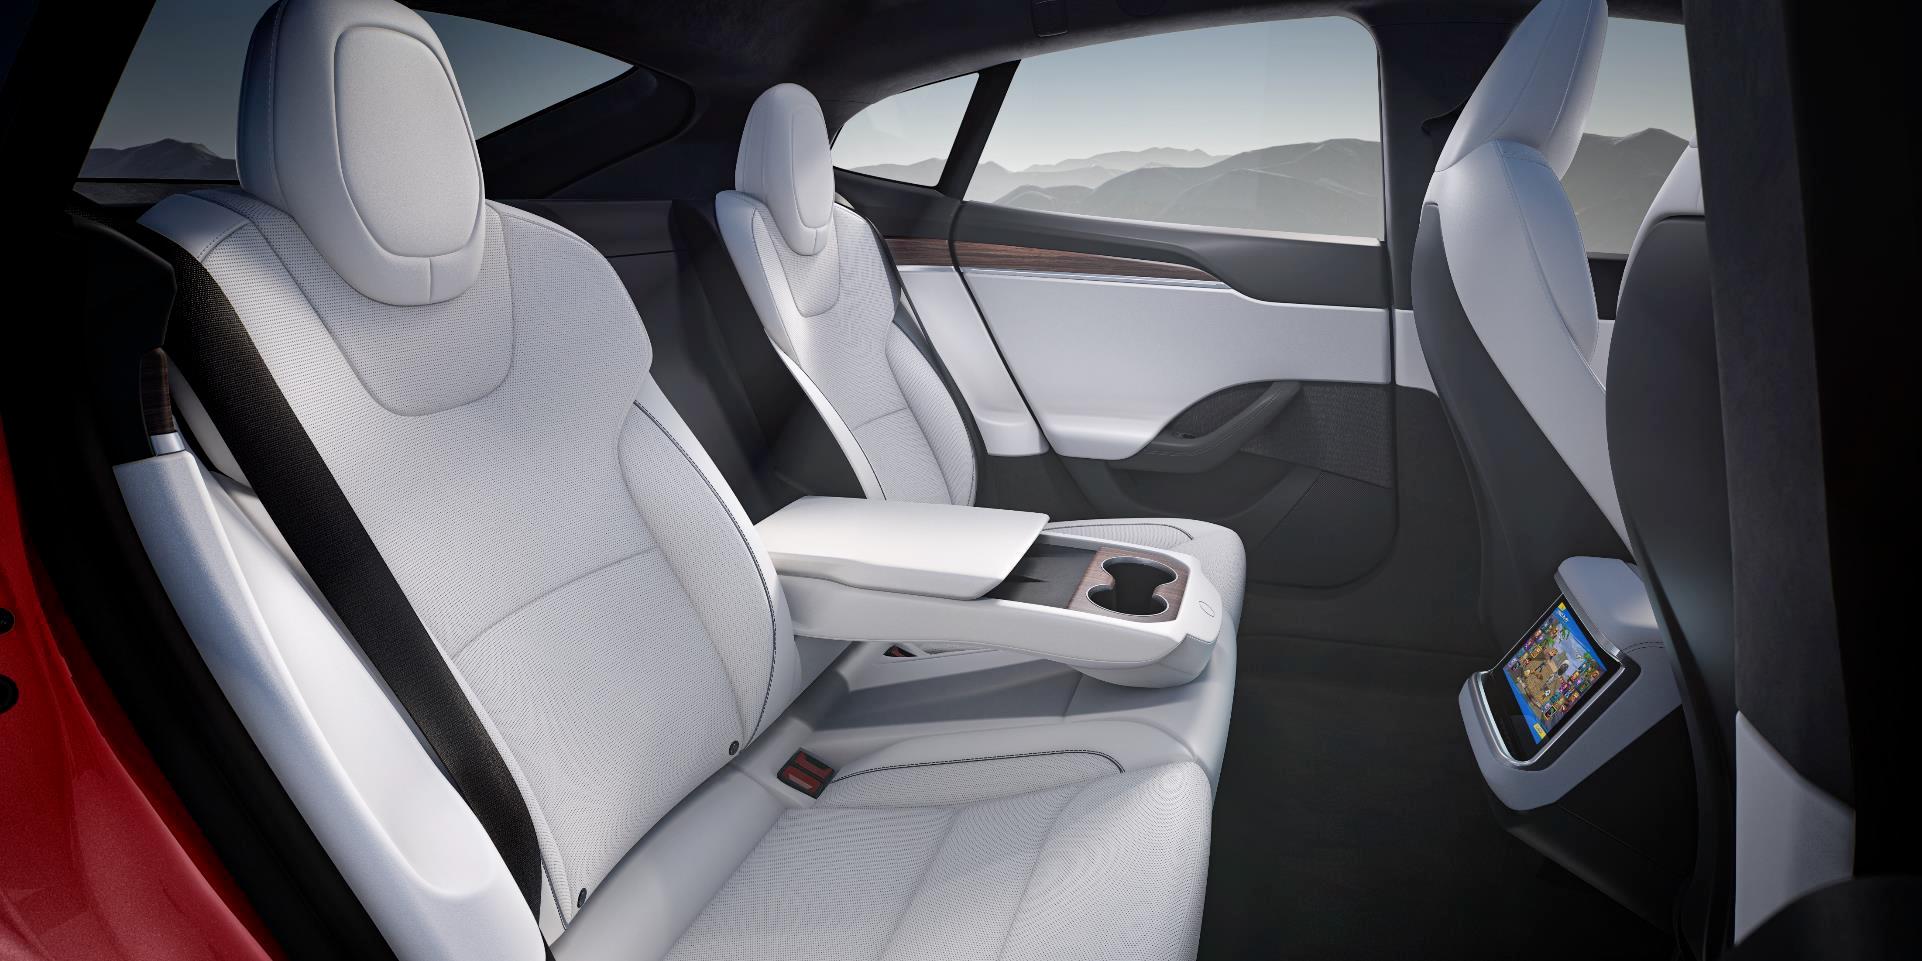 Tesla Model S interior rear seat touchscreen armrest